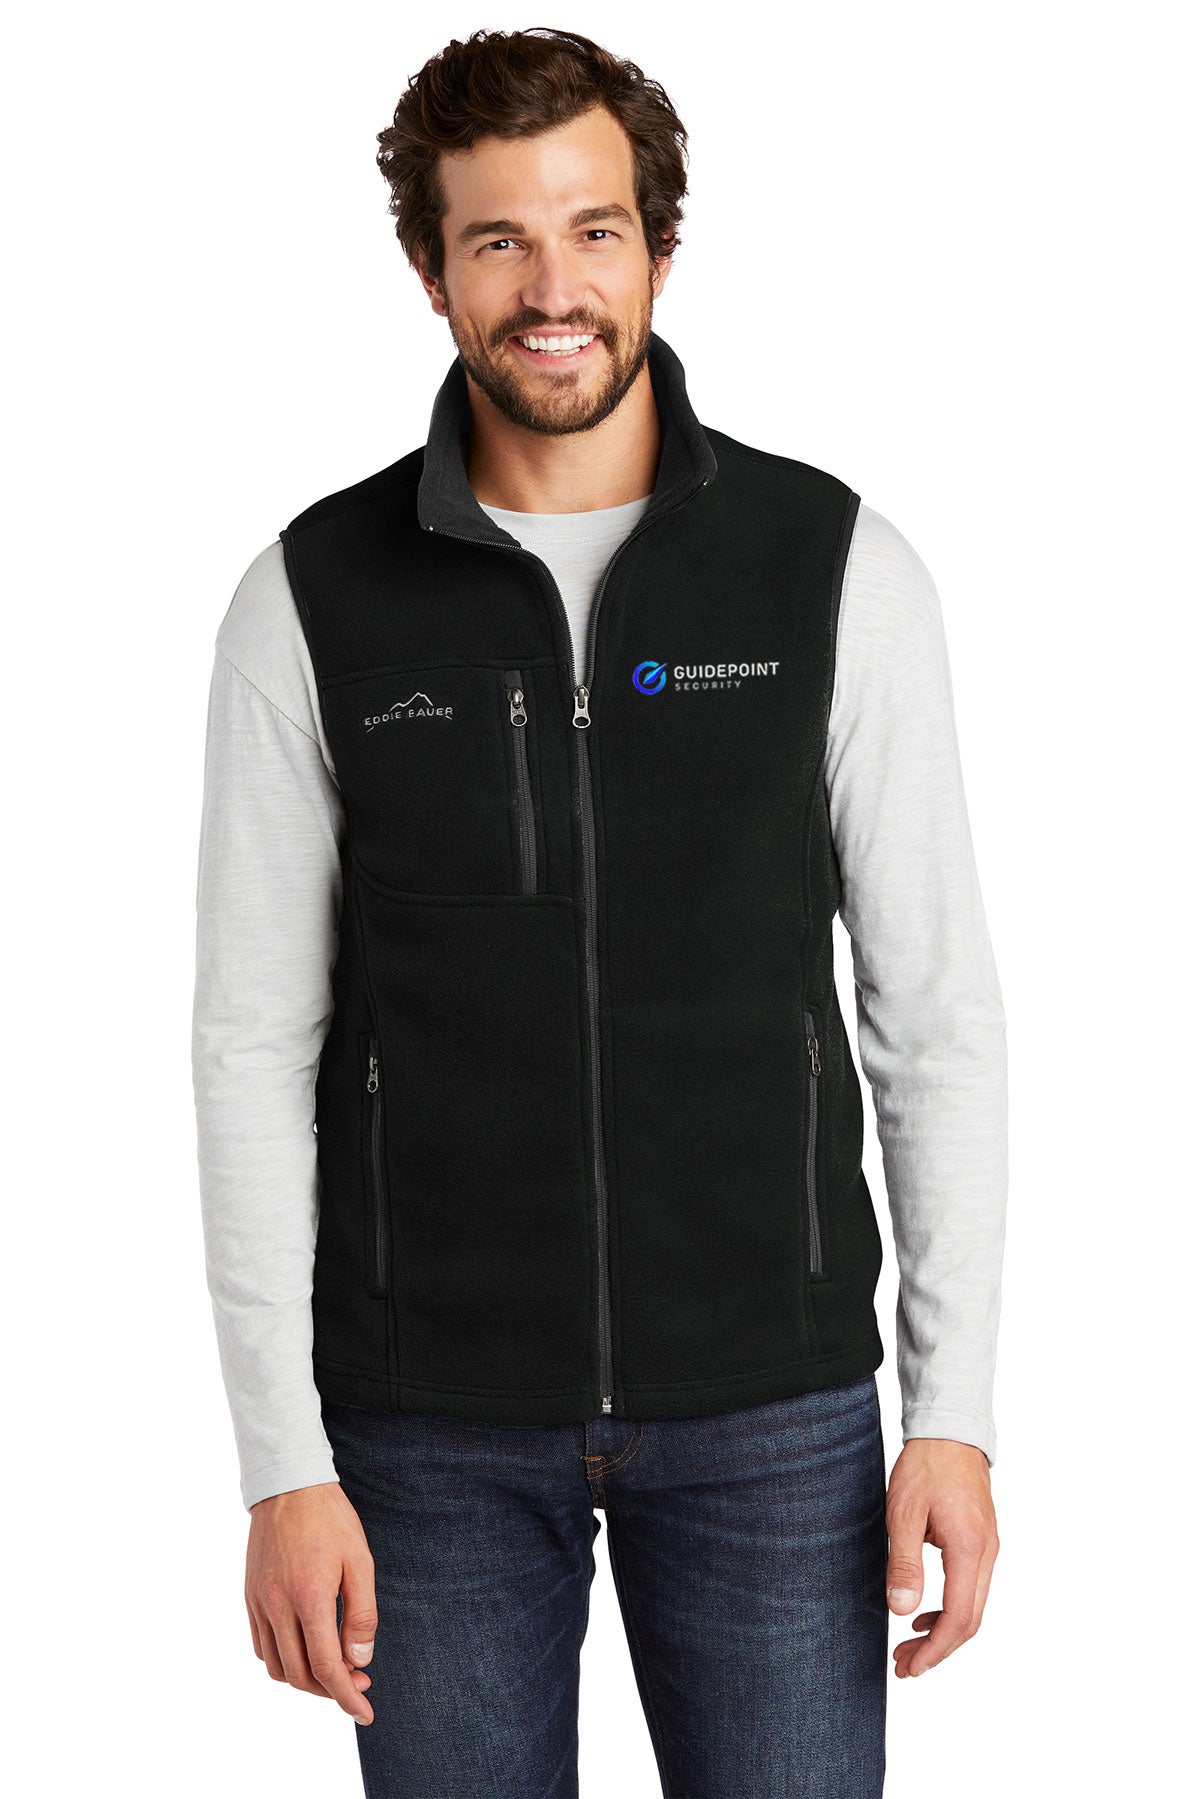 Eddie Bauer Branded Fleece Vest, Black [GuidePoint Security]